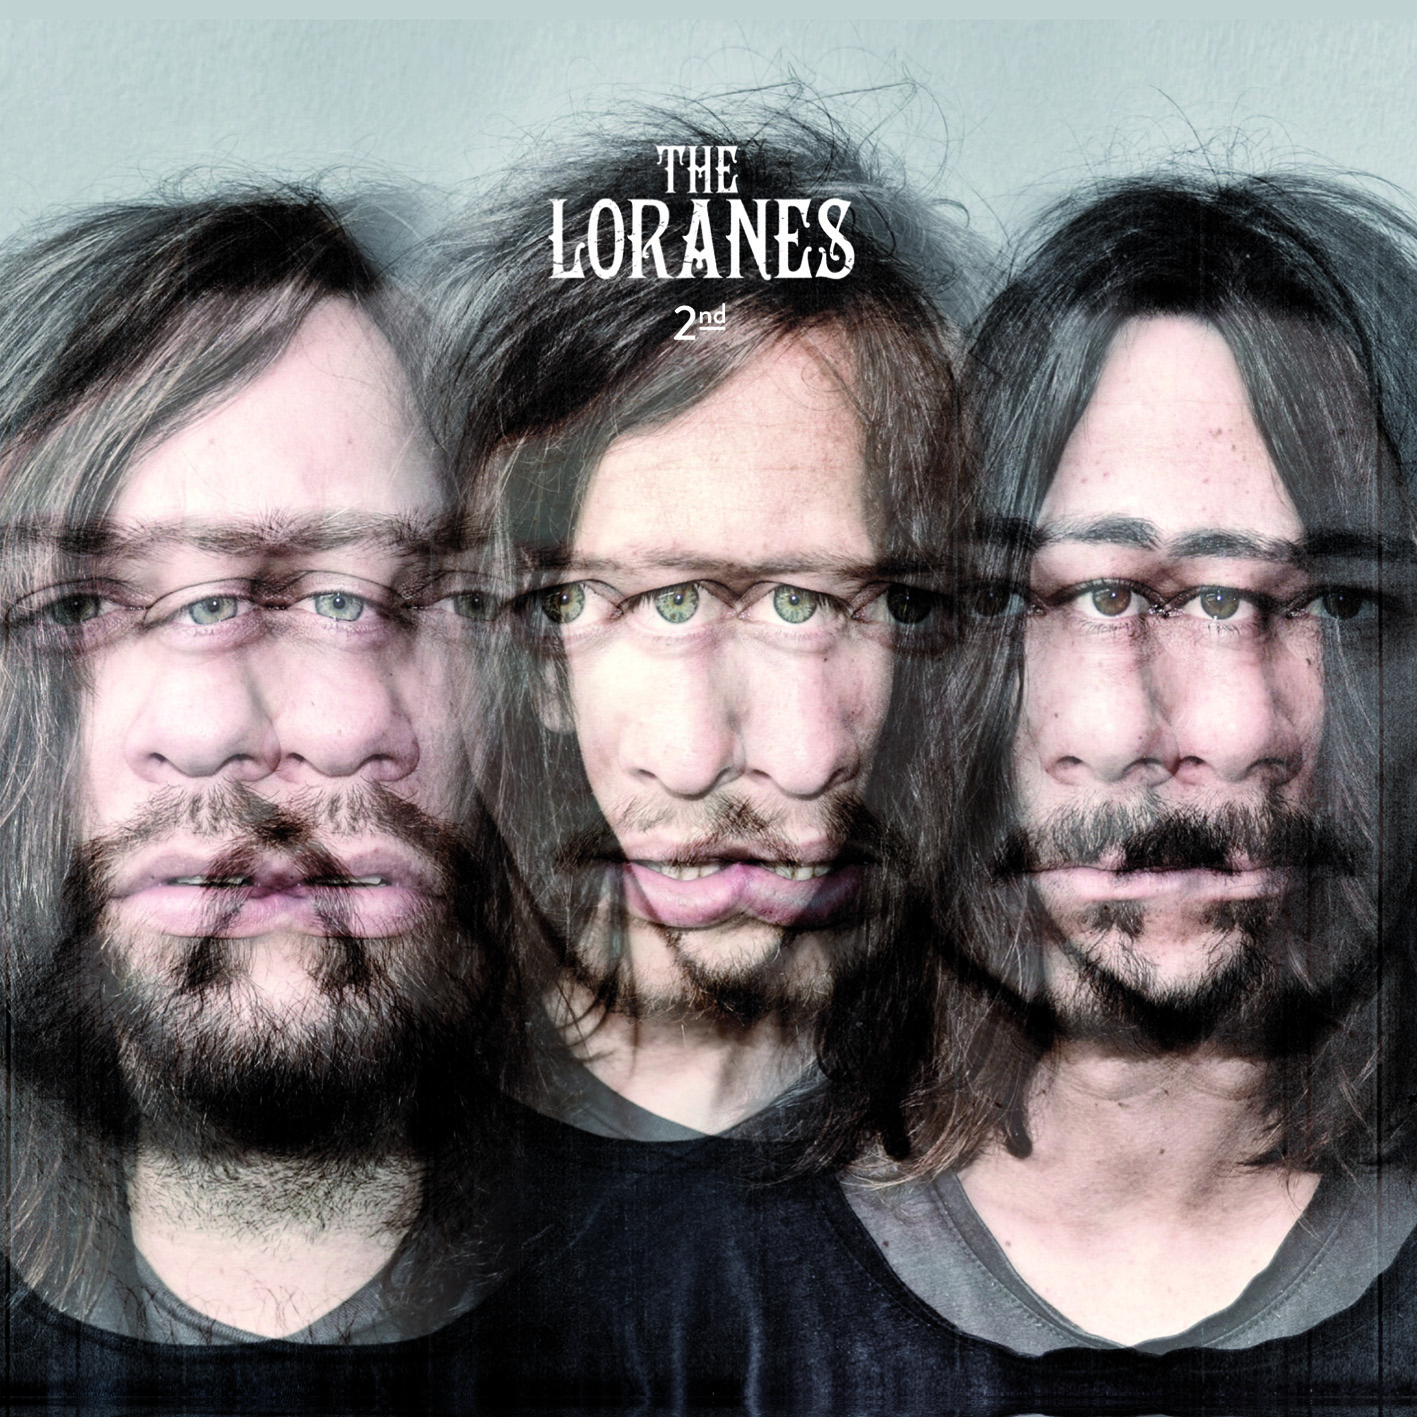 THE LORANES (De) – 2nd